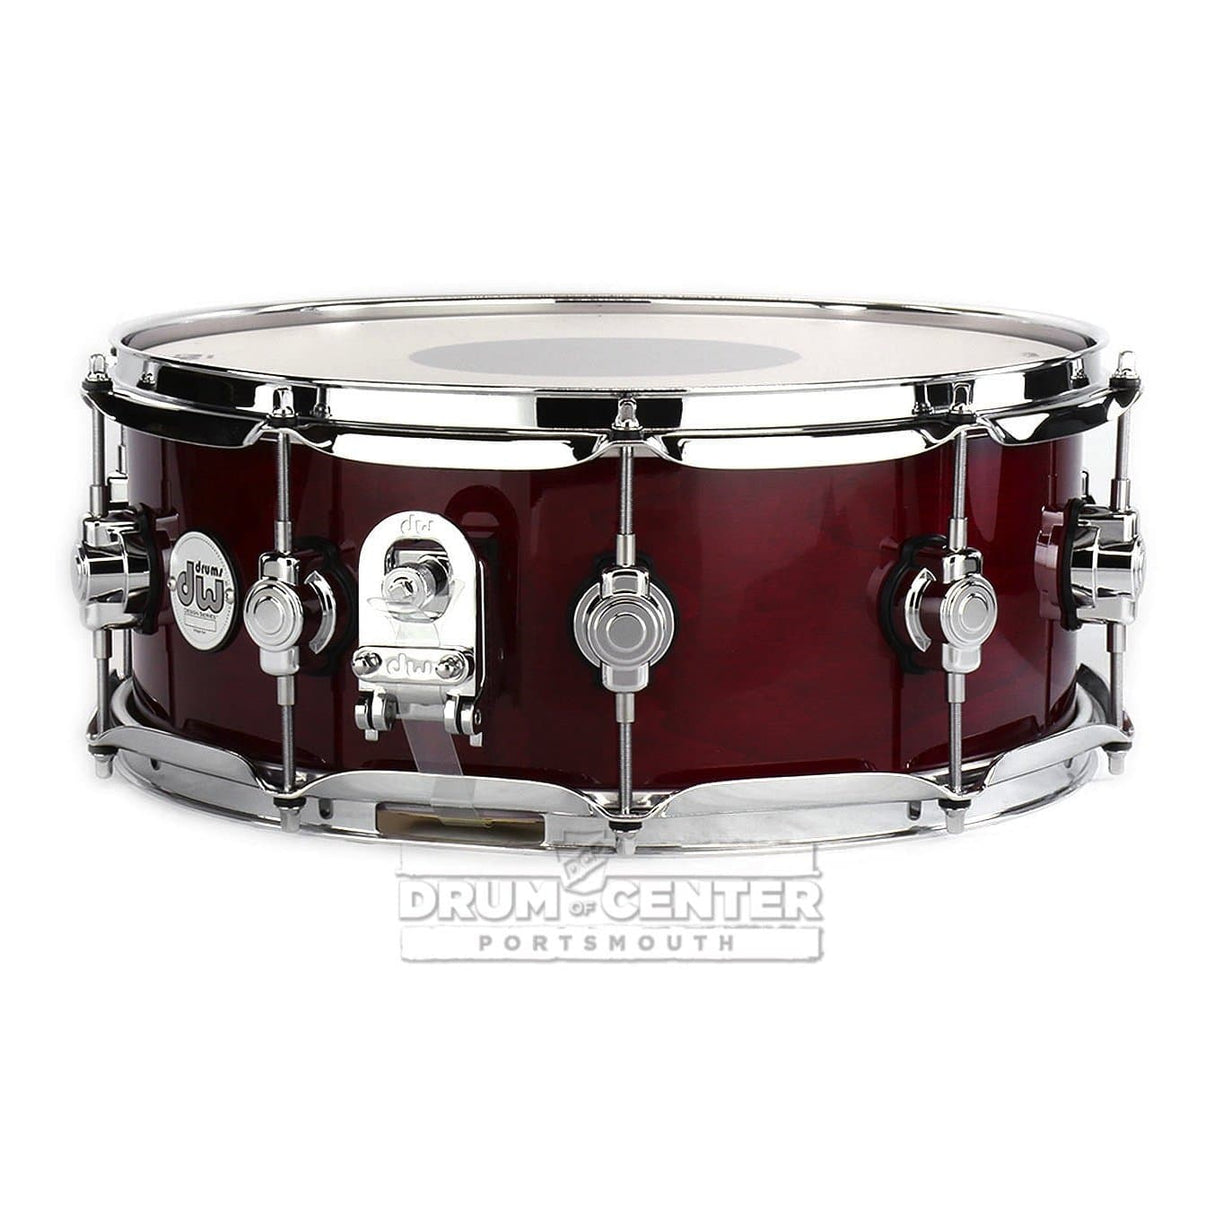 DW Design 14x5.5 Snare Drum - Cherry Stain